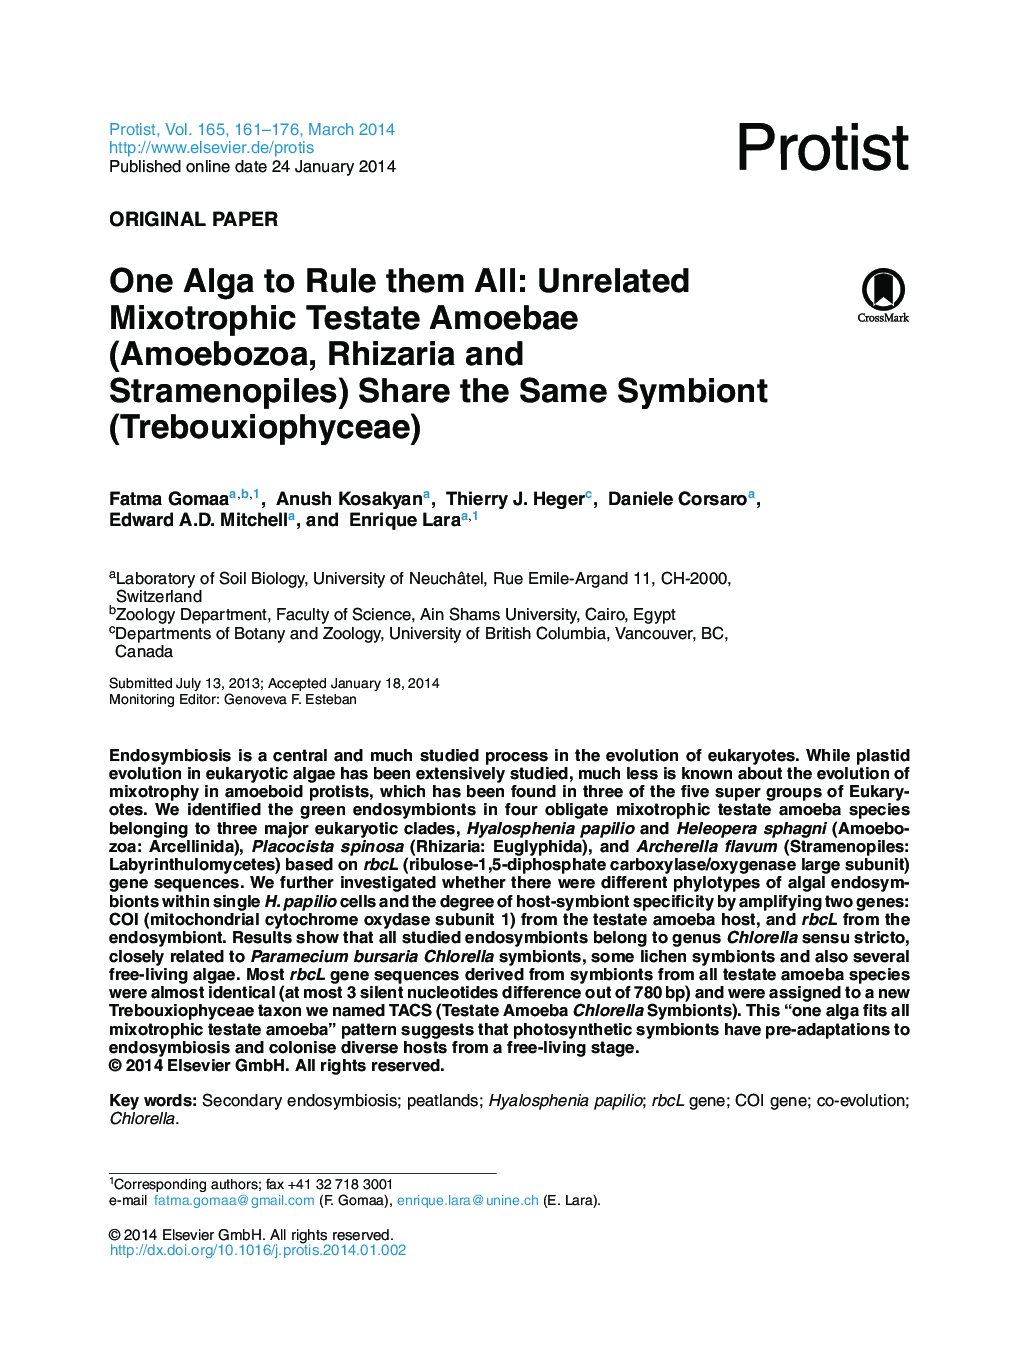 One Alga to Rule them All: Unrelated Mixotrophic Testate Amoebae (Amoebozoa, Rhizaria and Stramenopiles) Share the Same Symbiont (Trebouxiophyceae)